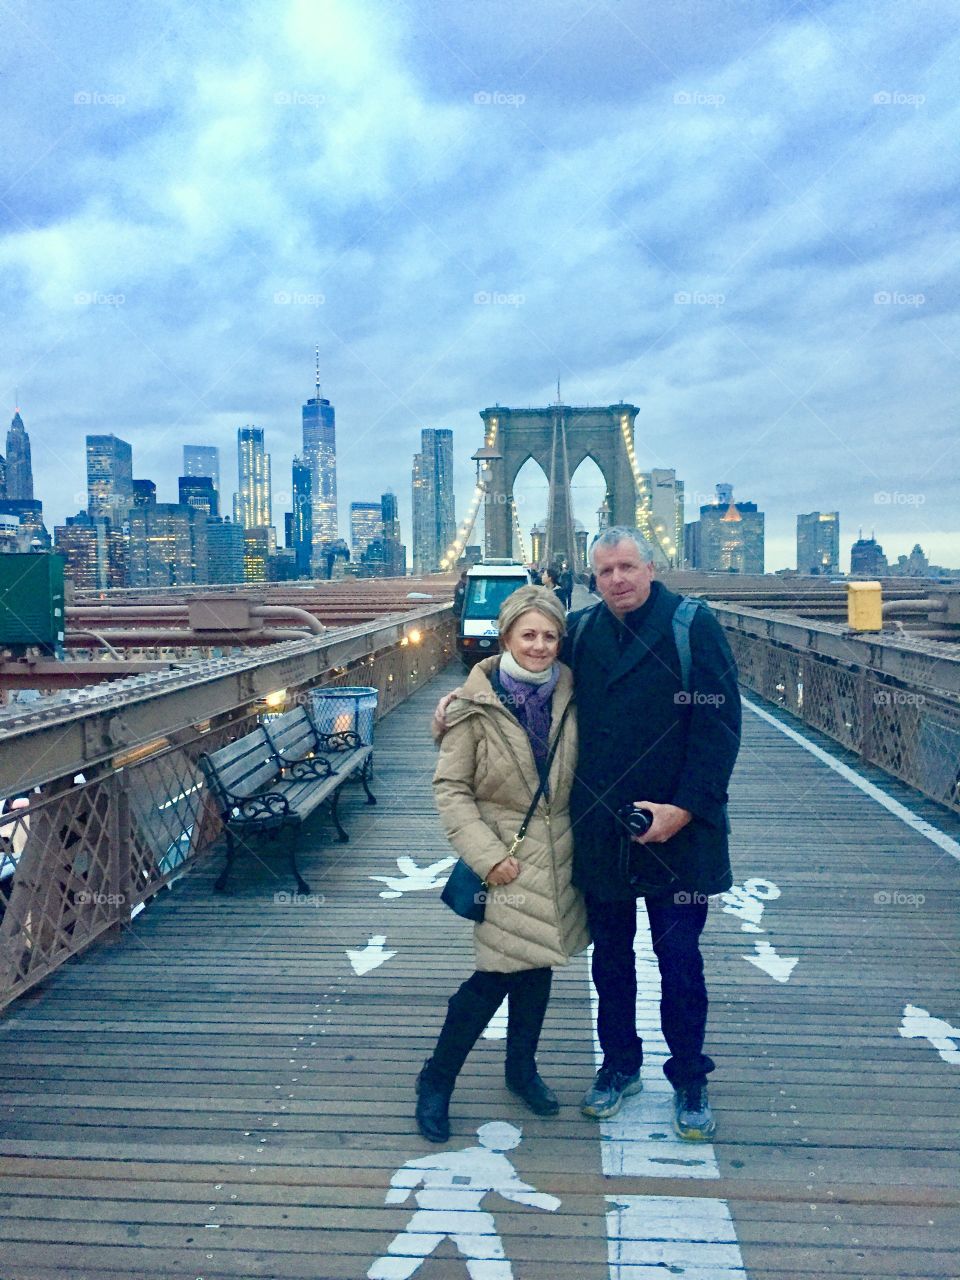 Brooklyn bridge New York City get away!